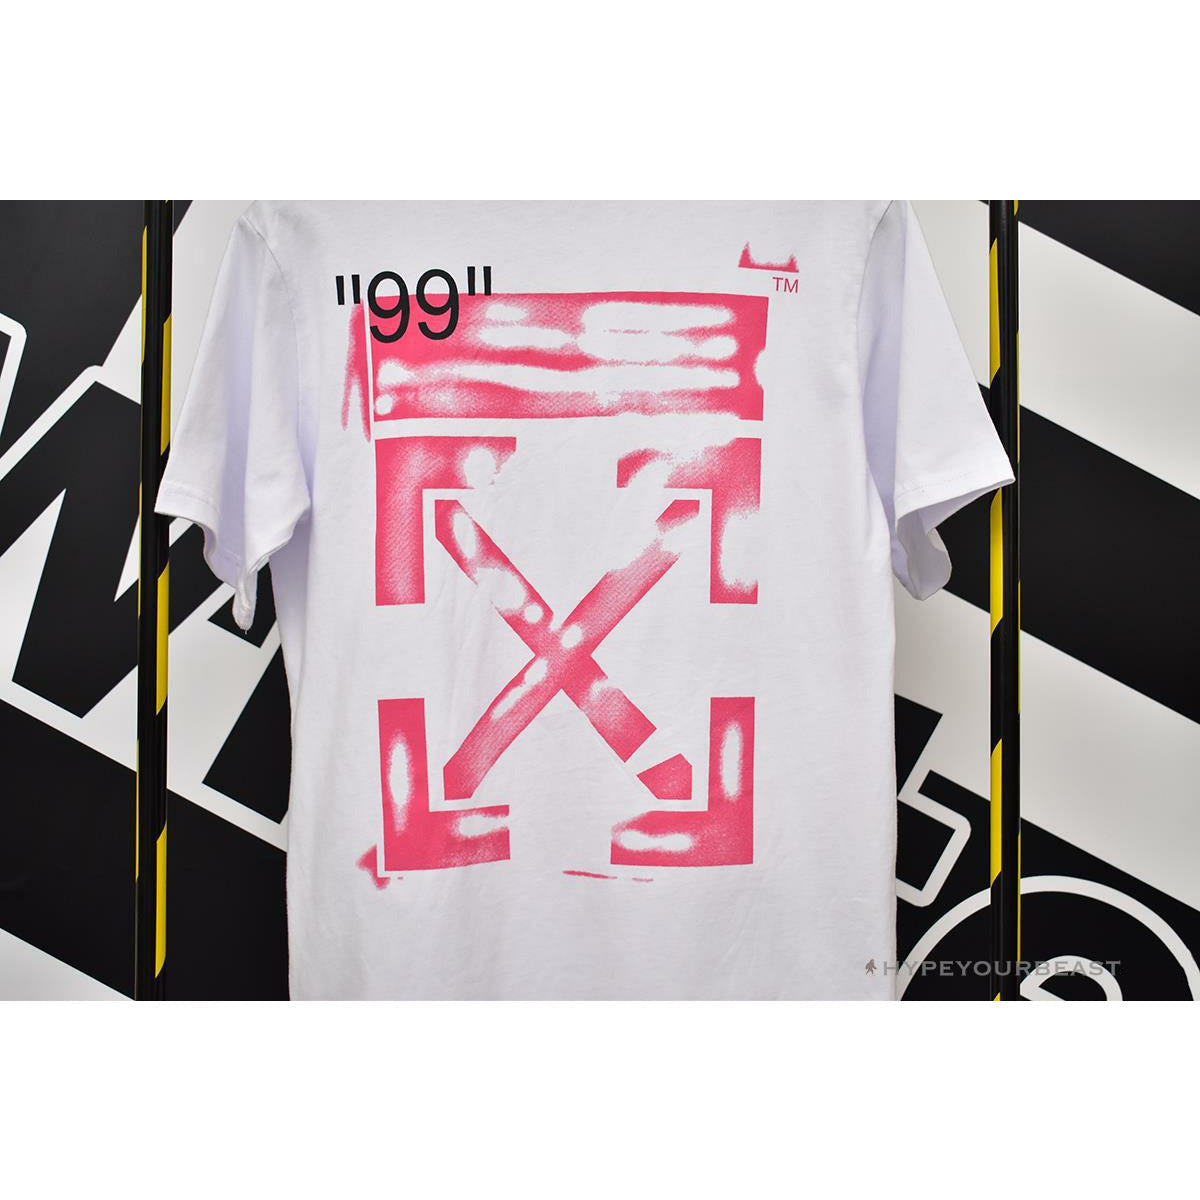 OFF-WHITE 99 Pink Arrow Tee Shirt 'WHITE'